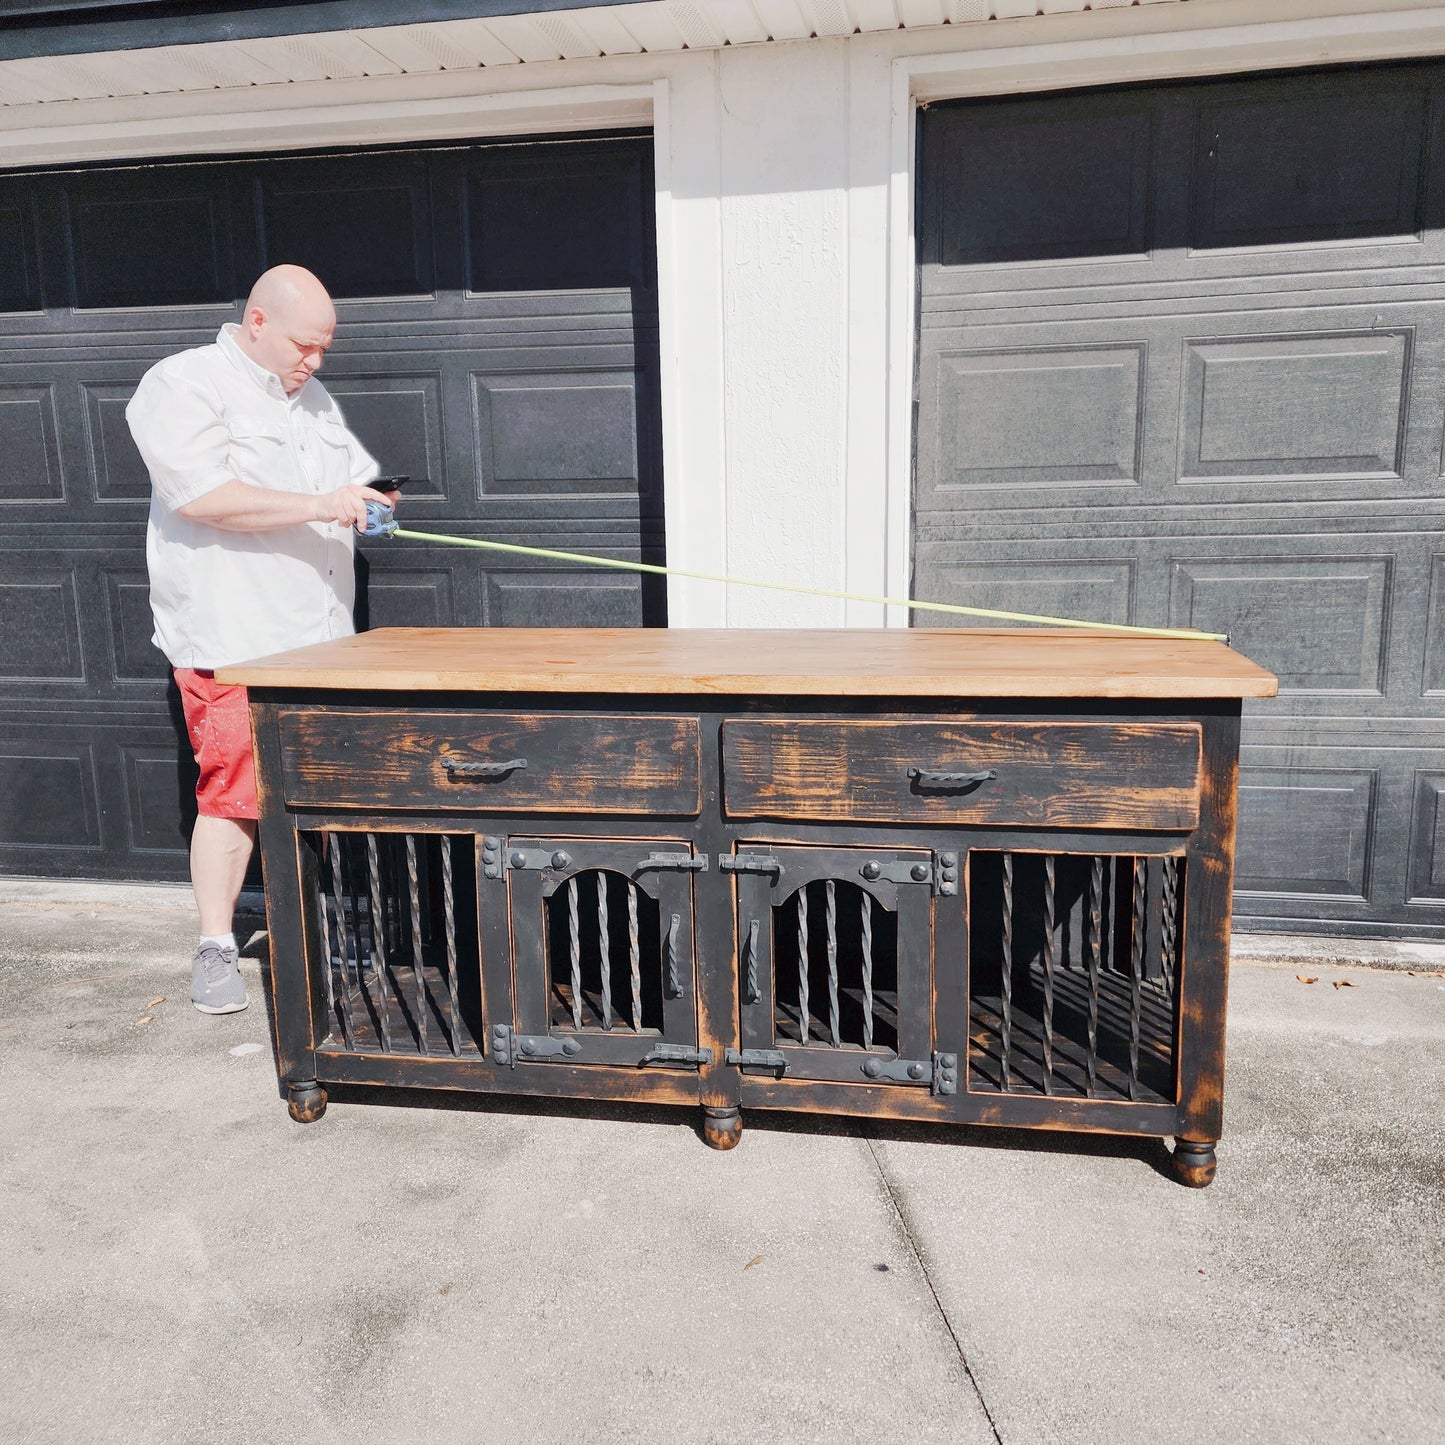 Best Seller Dog crate furniture - Rustic cottage collection - Distressed Black